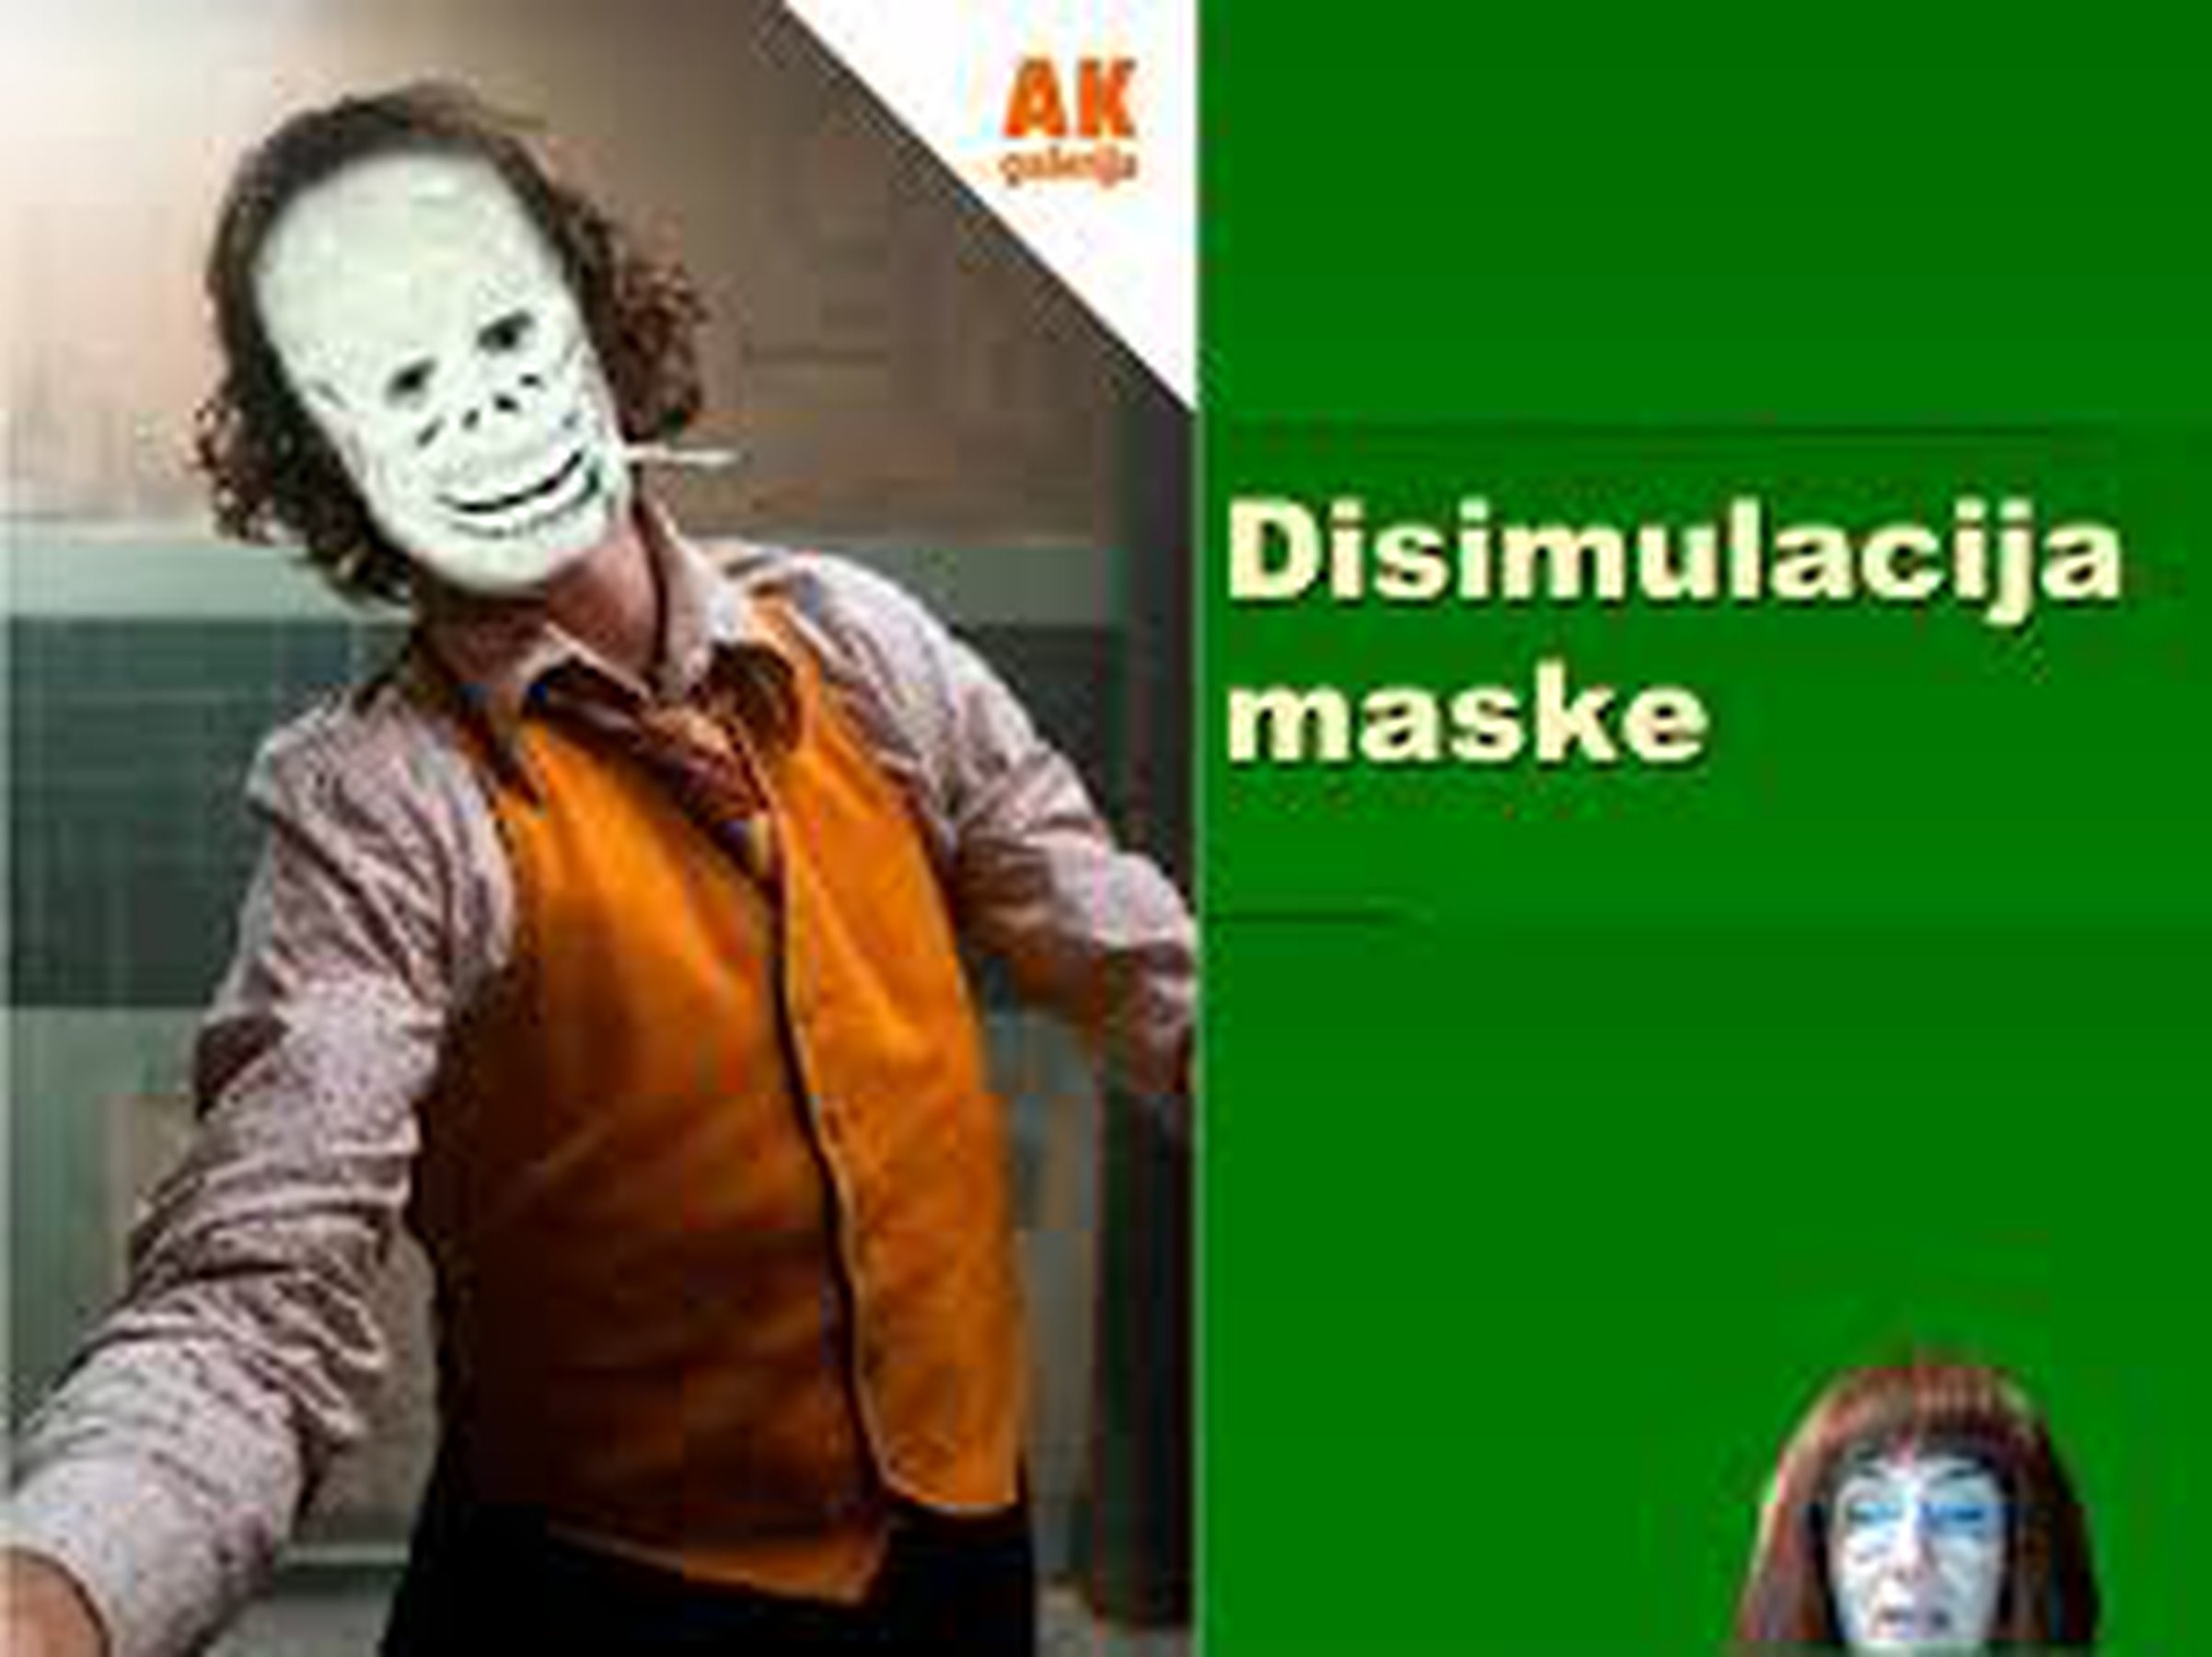 Mask dissimulation